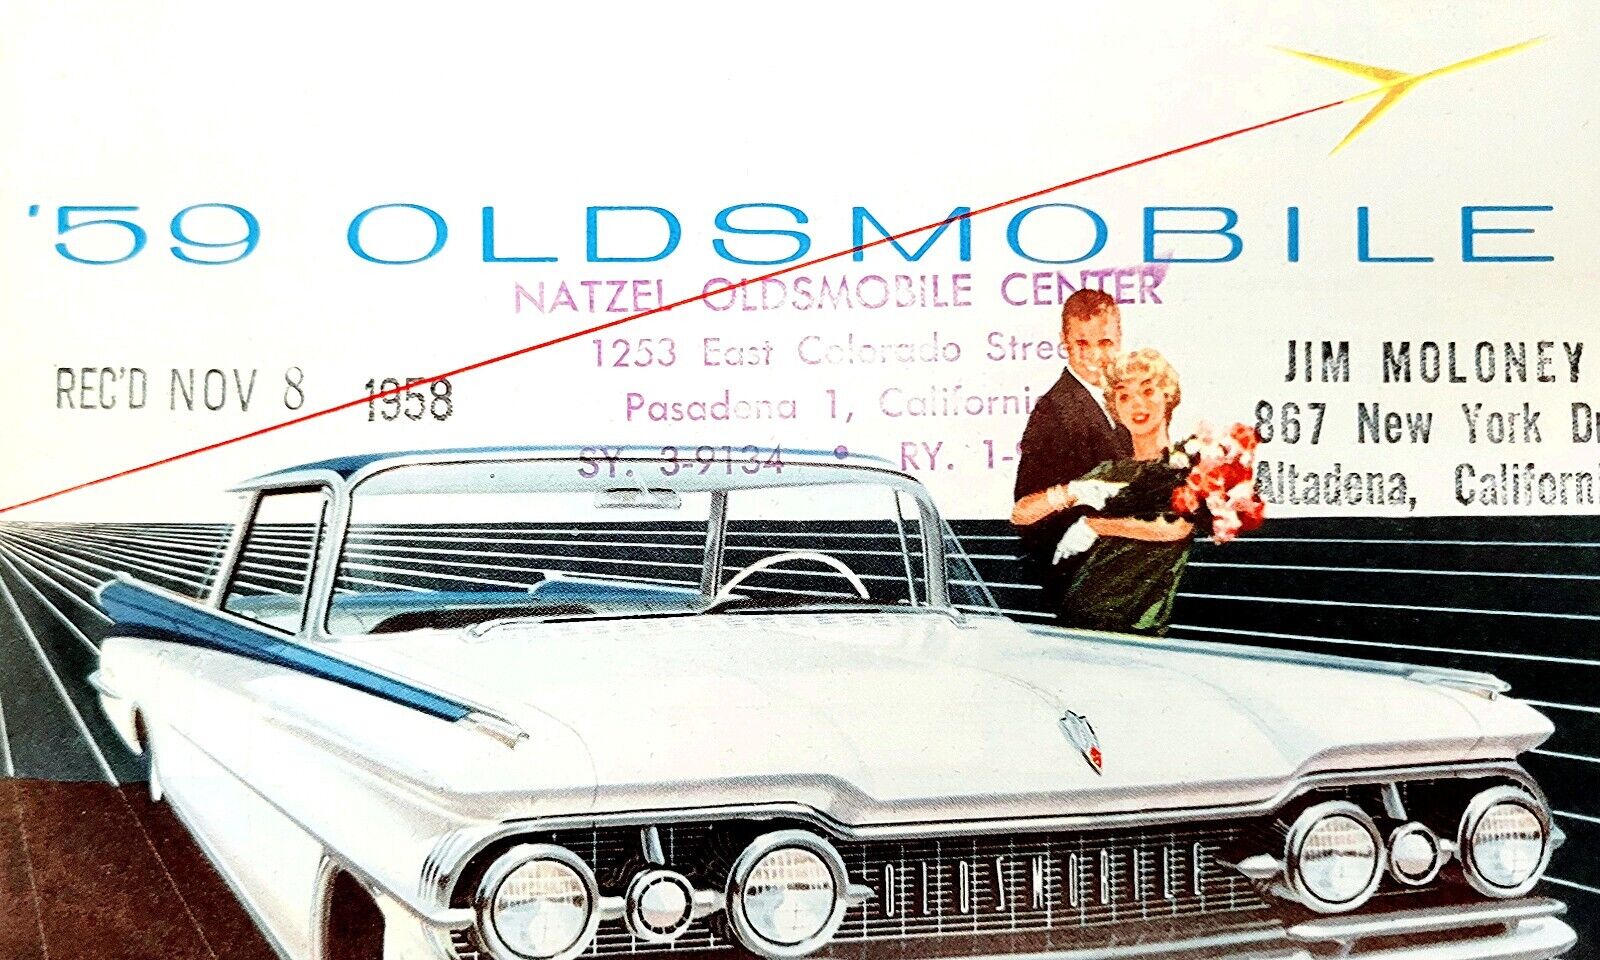 1959 Oldsmobile COLOR Brochure  ALL Models - Very Nice - Excellent